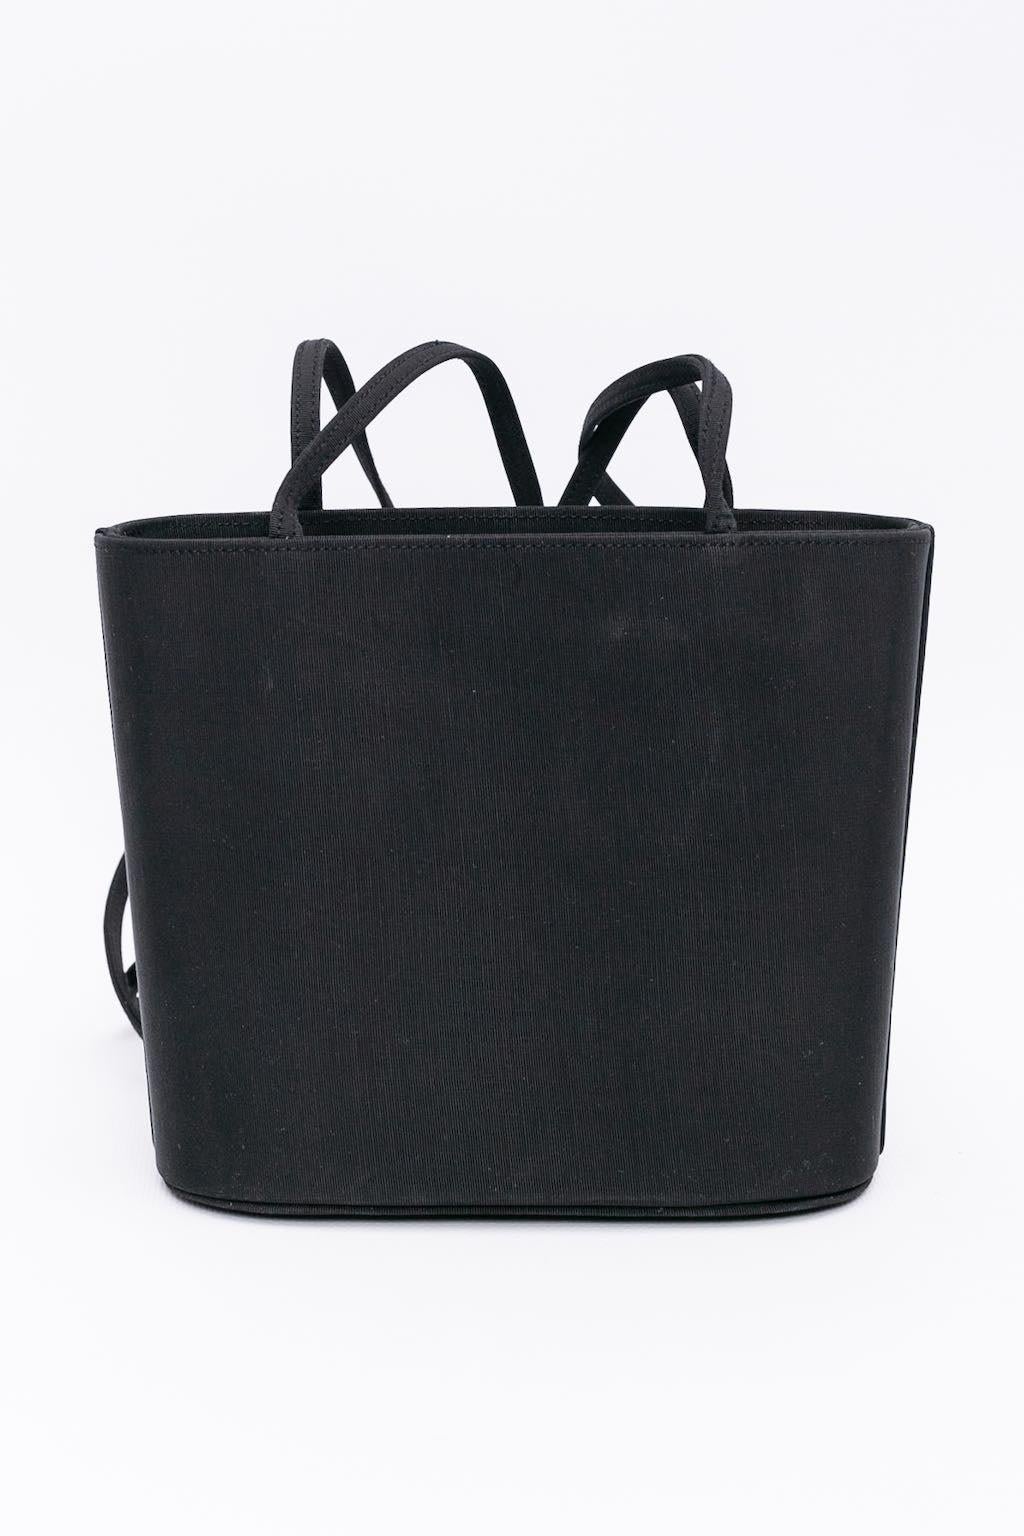 Women's Andrea Pfister Fruits Bag in Black Fabric